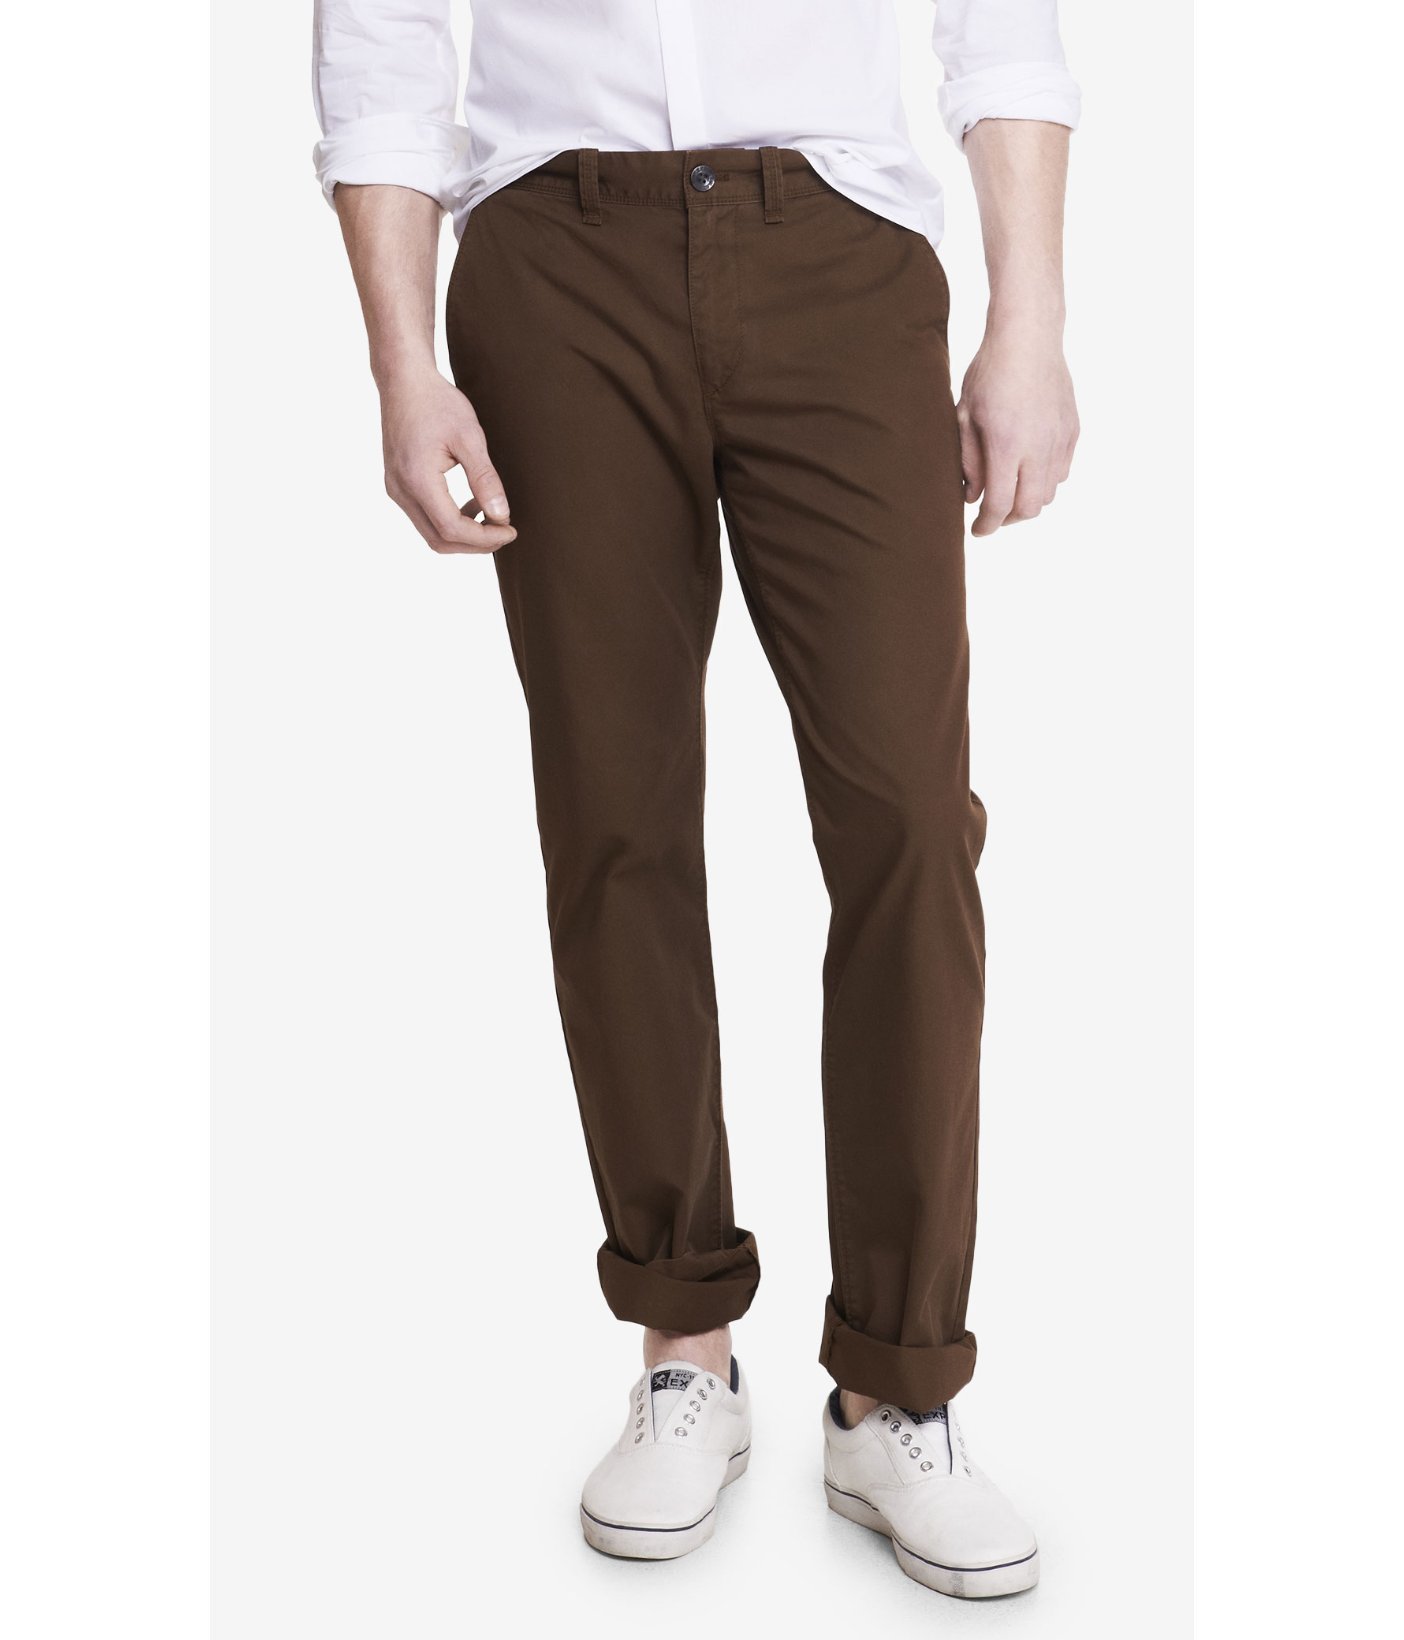 How Men Can Wear Brown Pants – Telegraph